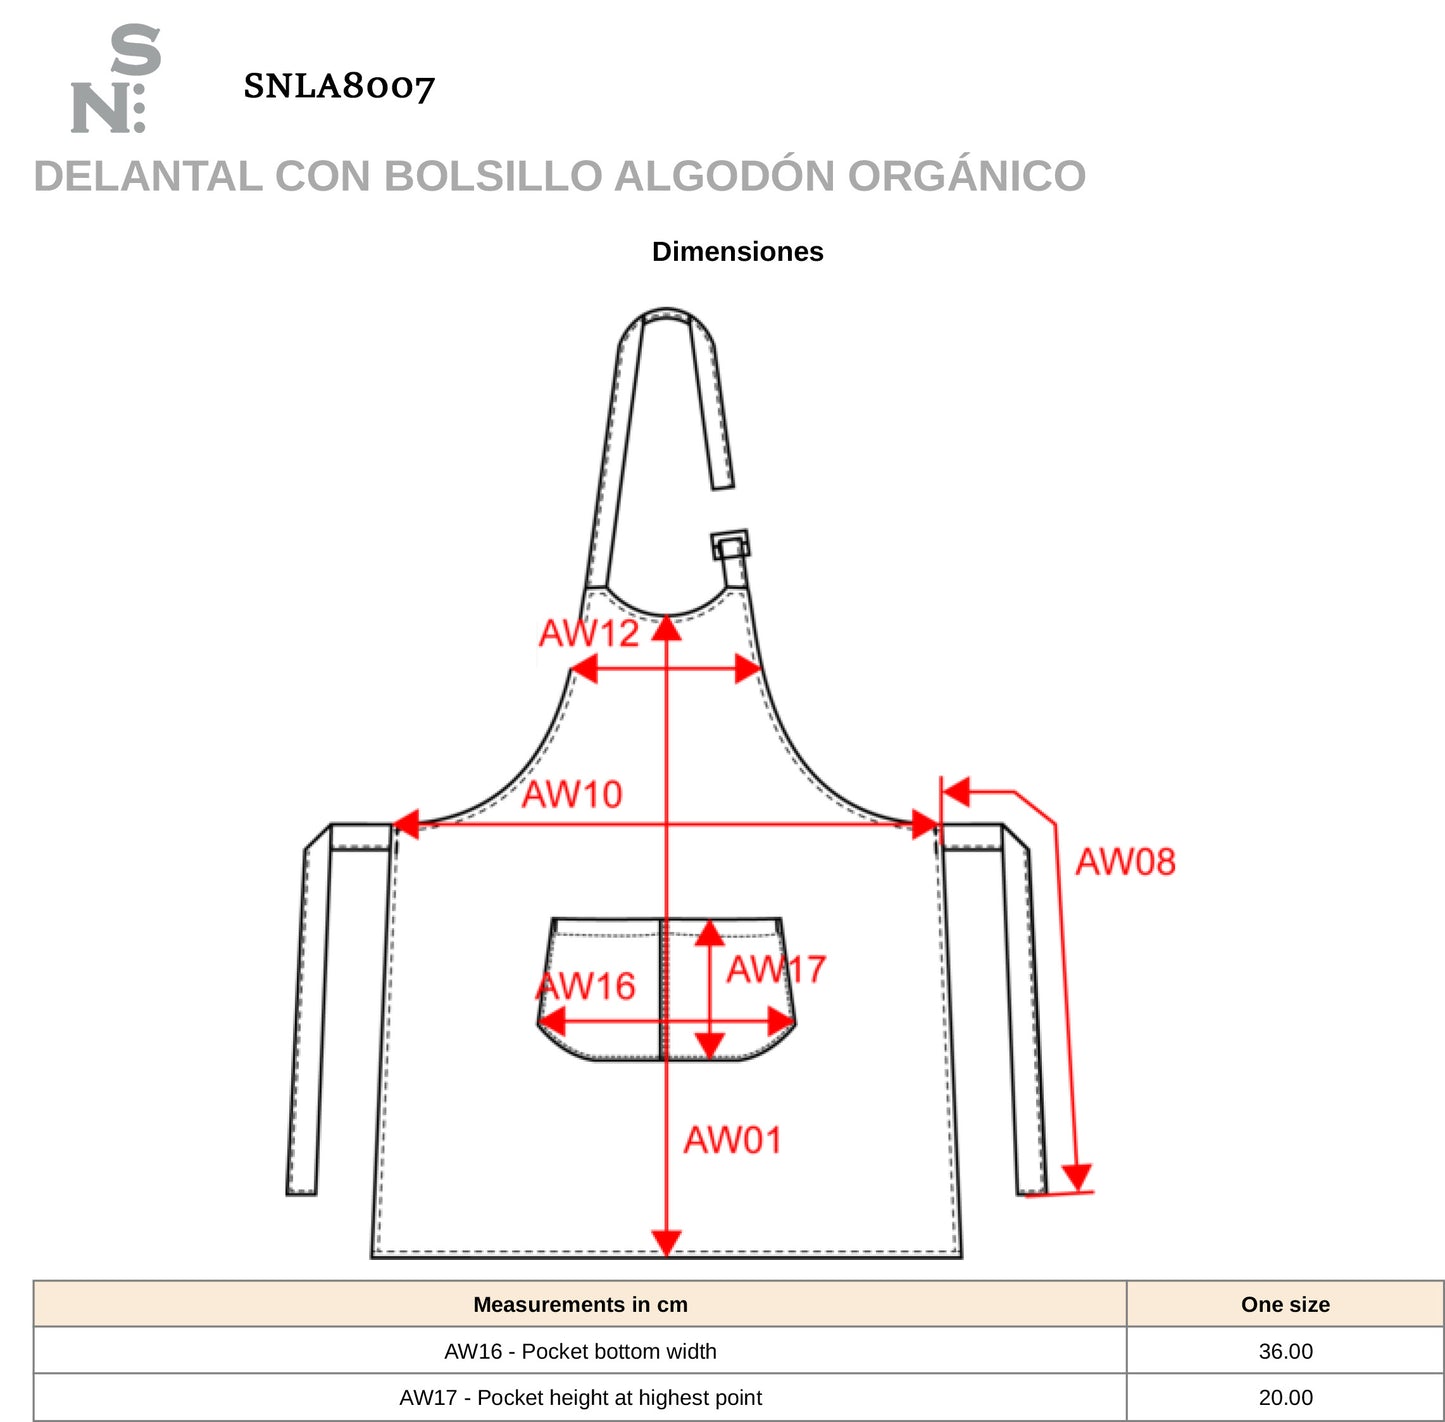 SNLA8007 - DELANTAL CON BOLSILLO ALGODÓN ORGÁNICO